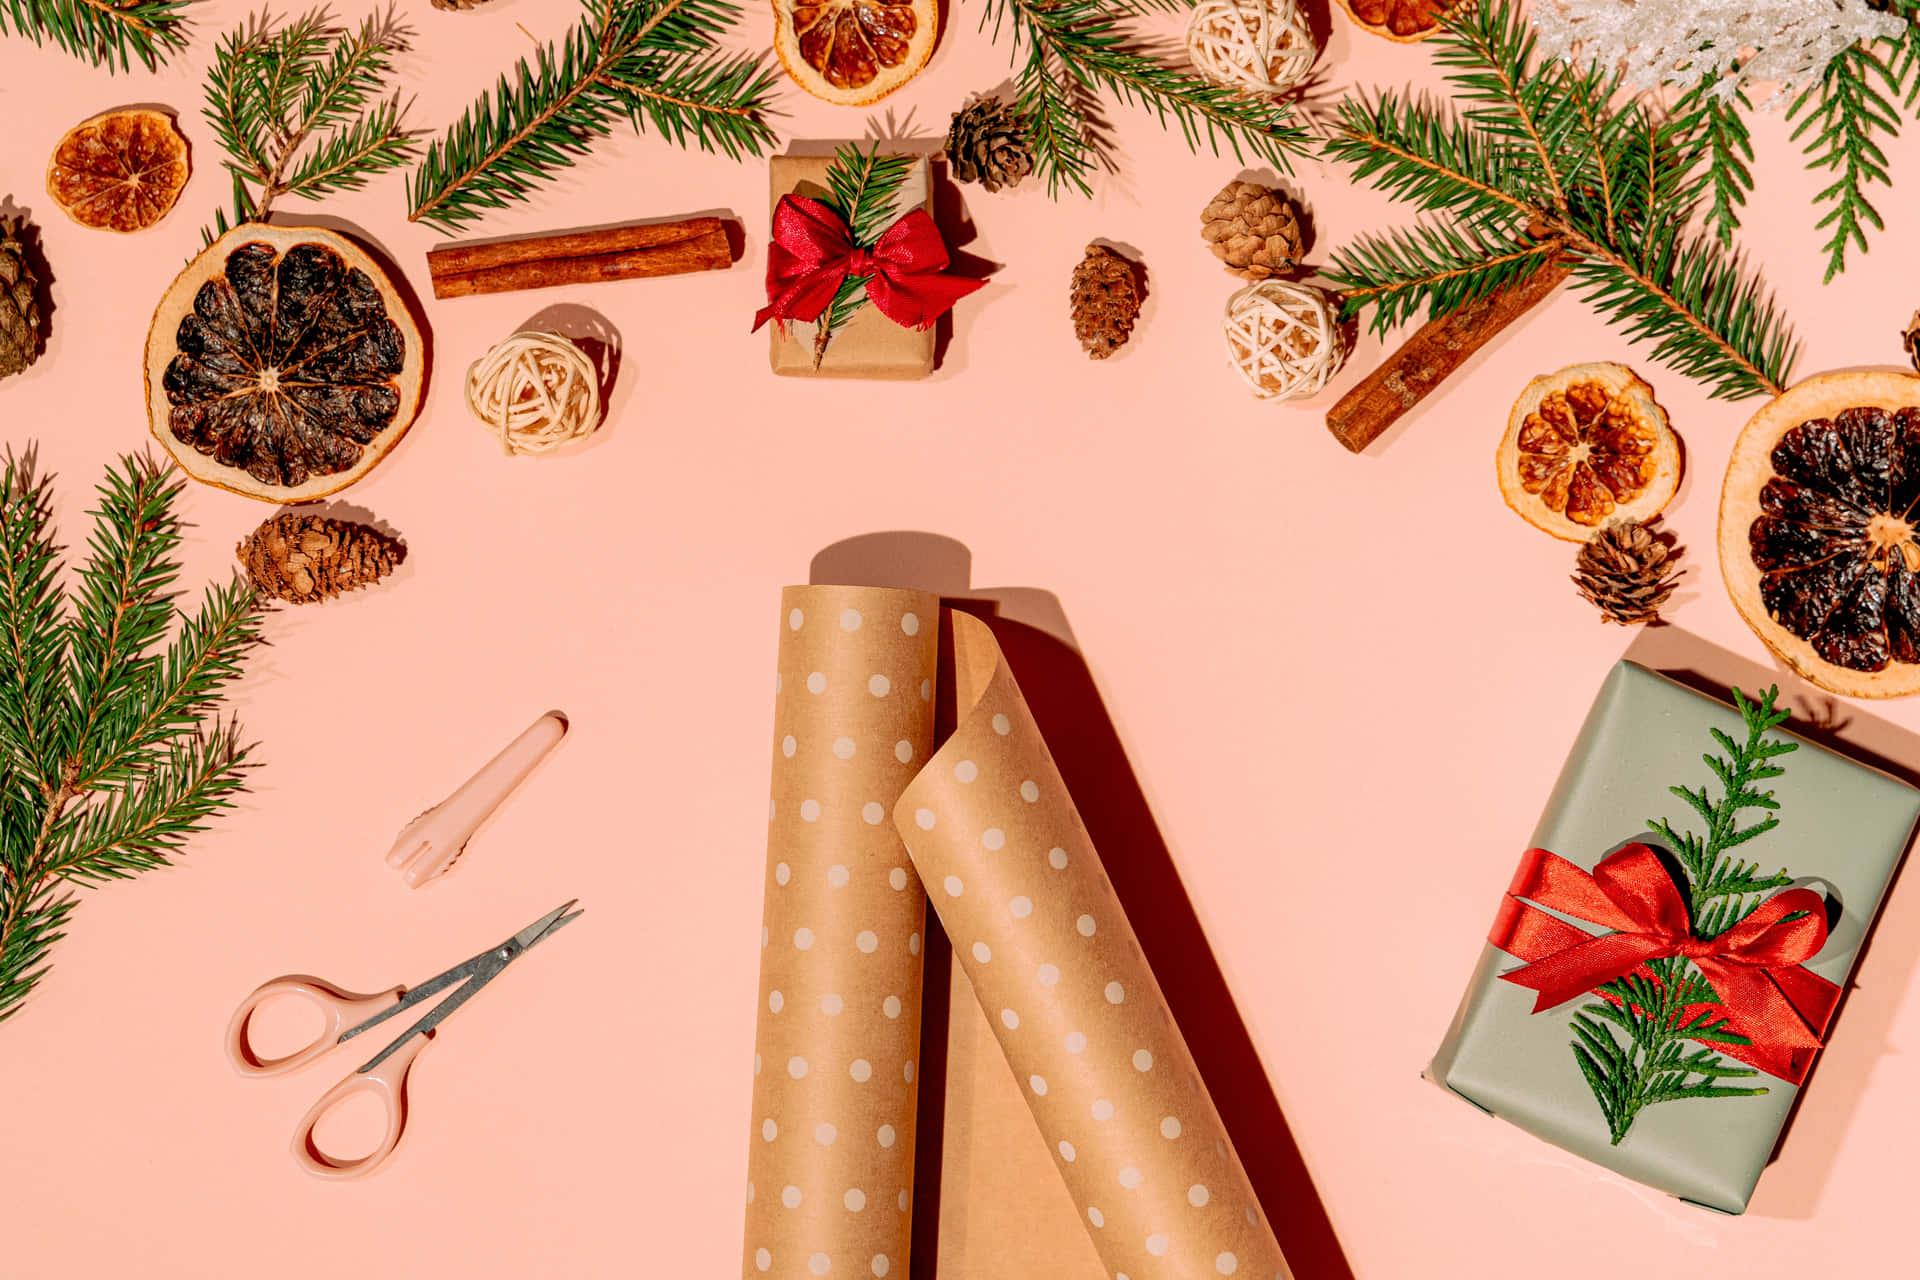 Celebrate Christmas with this stunning festive desktop wallpaper